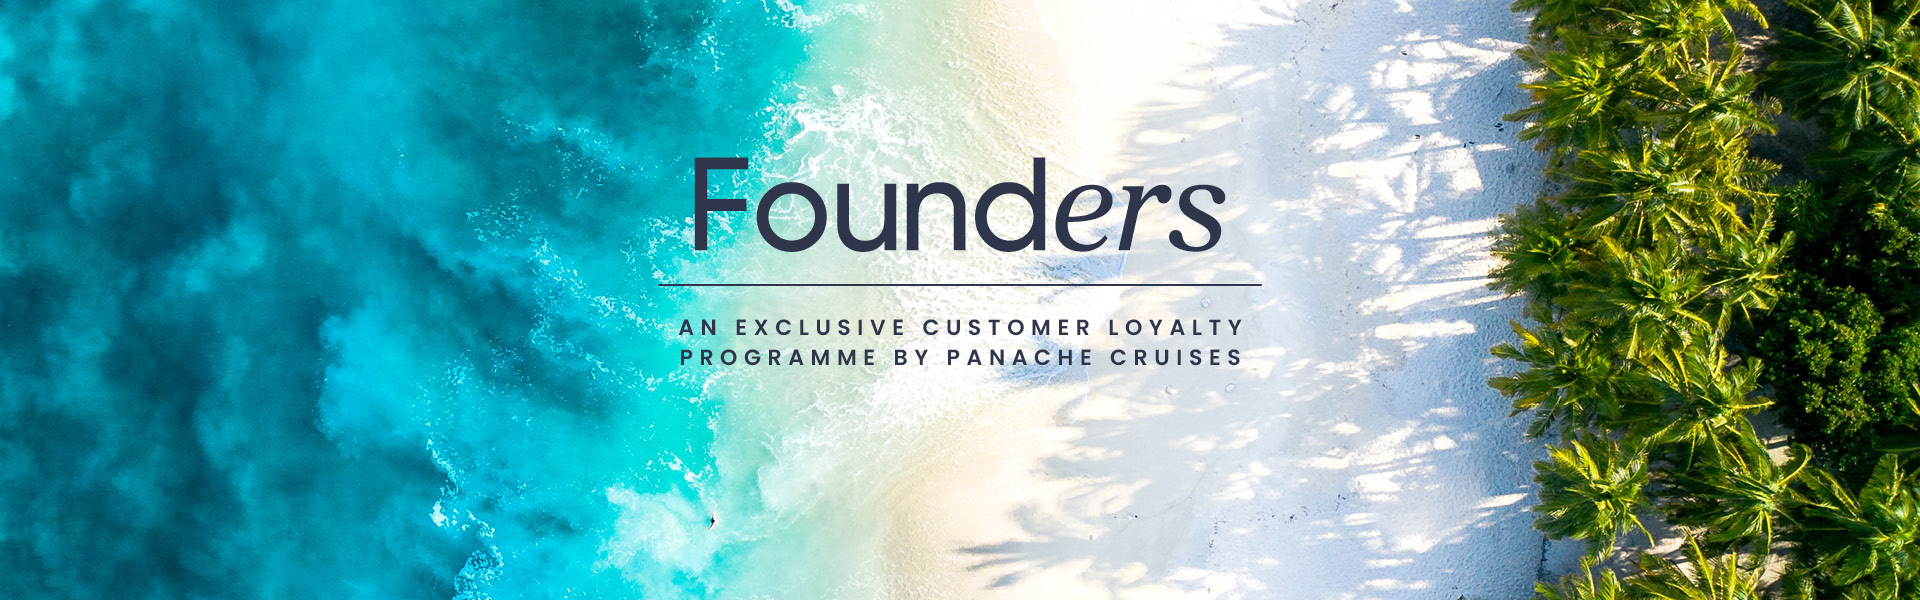 Panache Cruises Founders